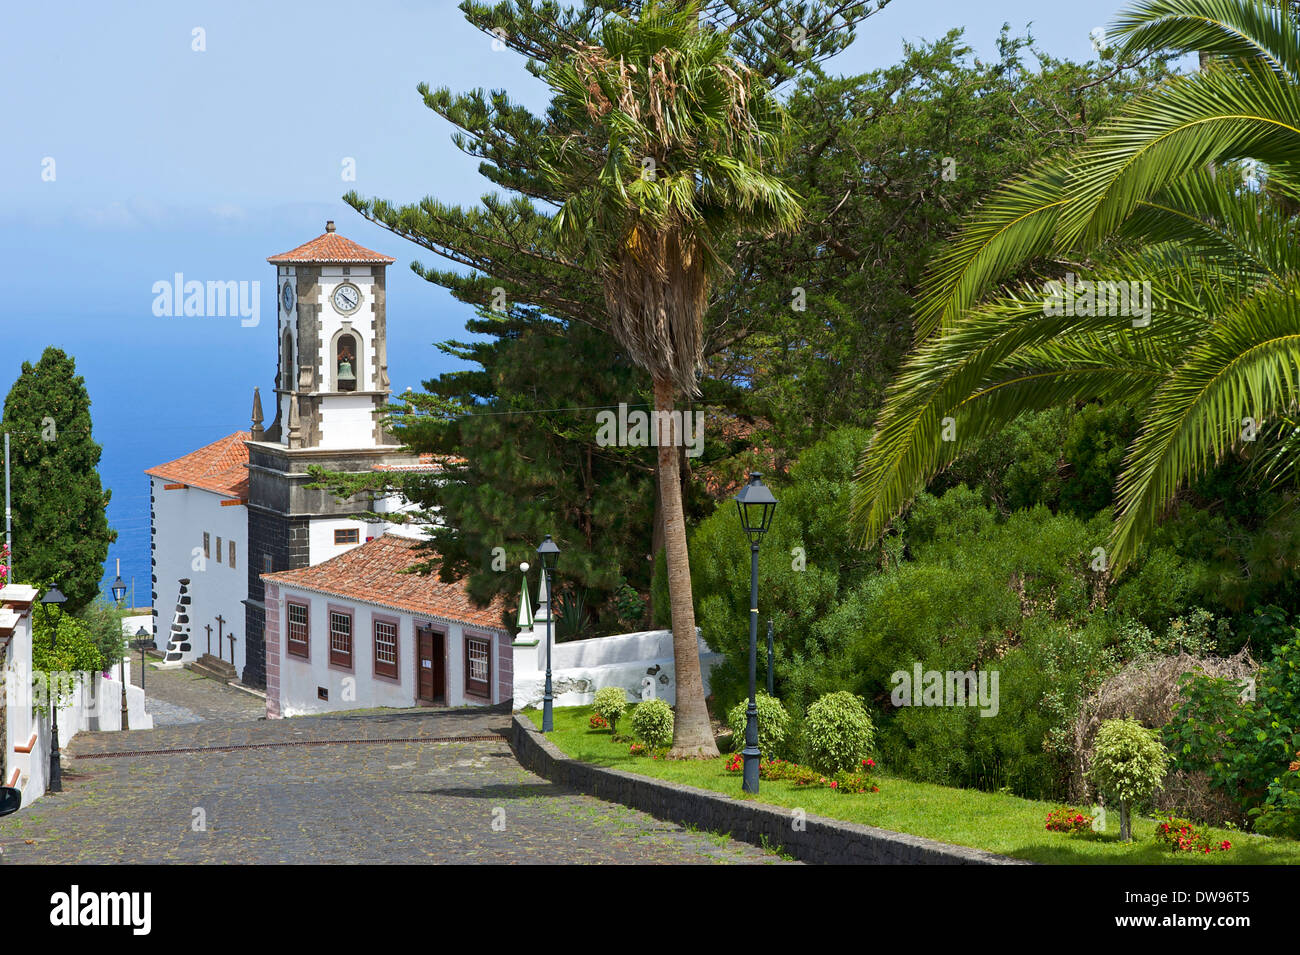 Villa de Mazo, La Palma, HDR Image Stock Photo - Alamy